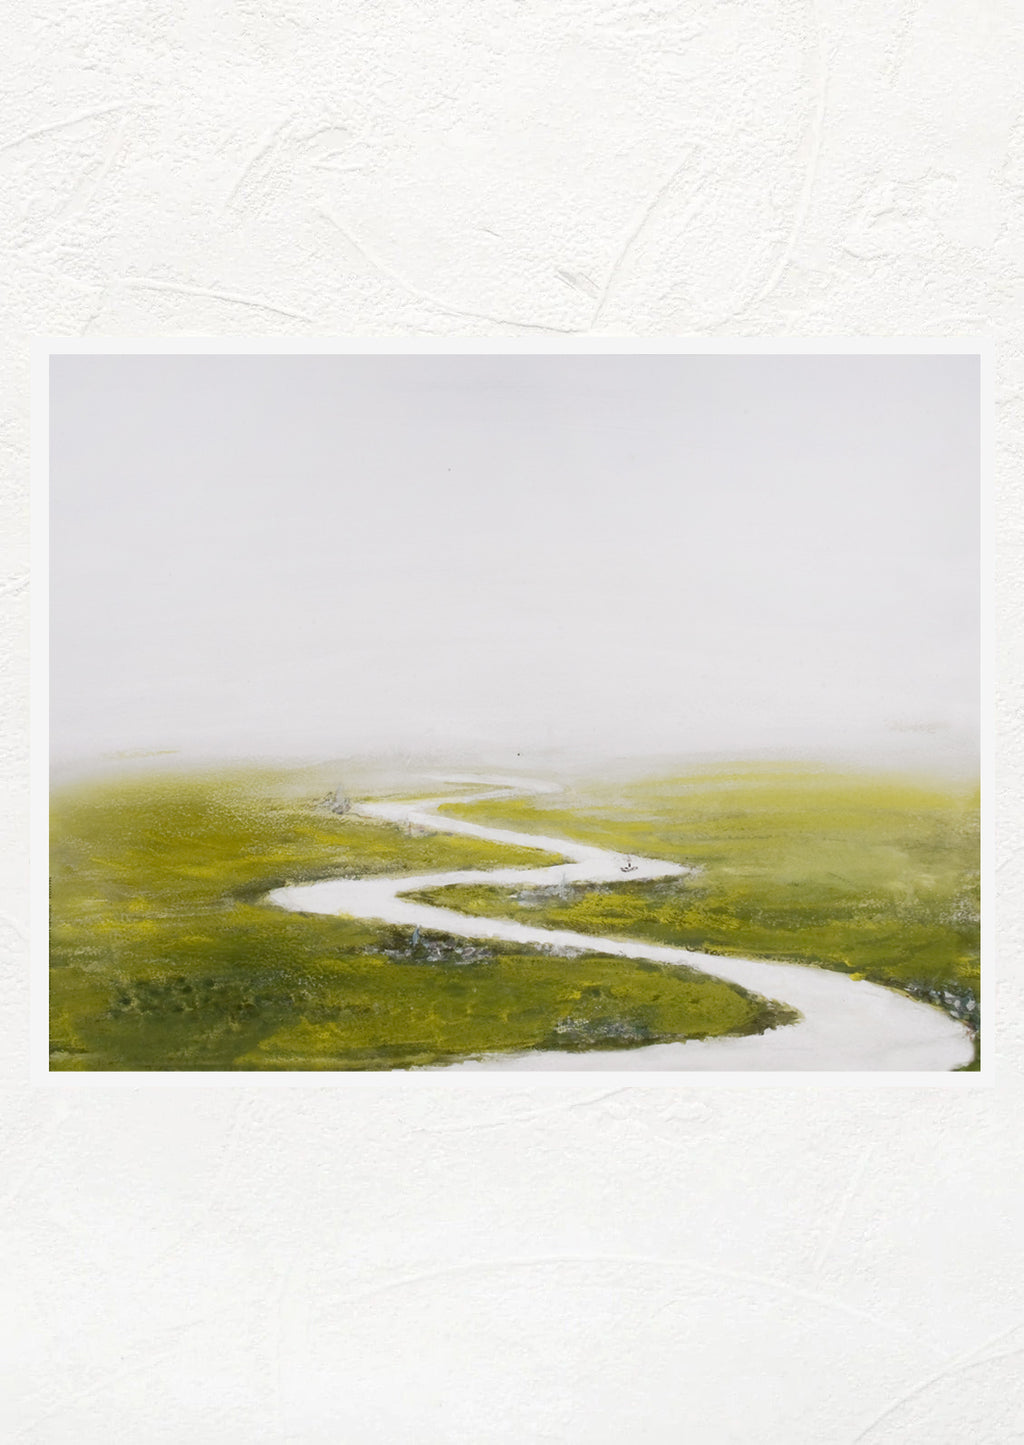 1: An art print of original painting depicting white river through green flatland.